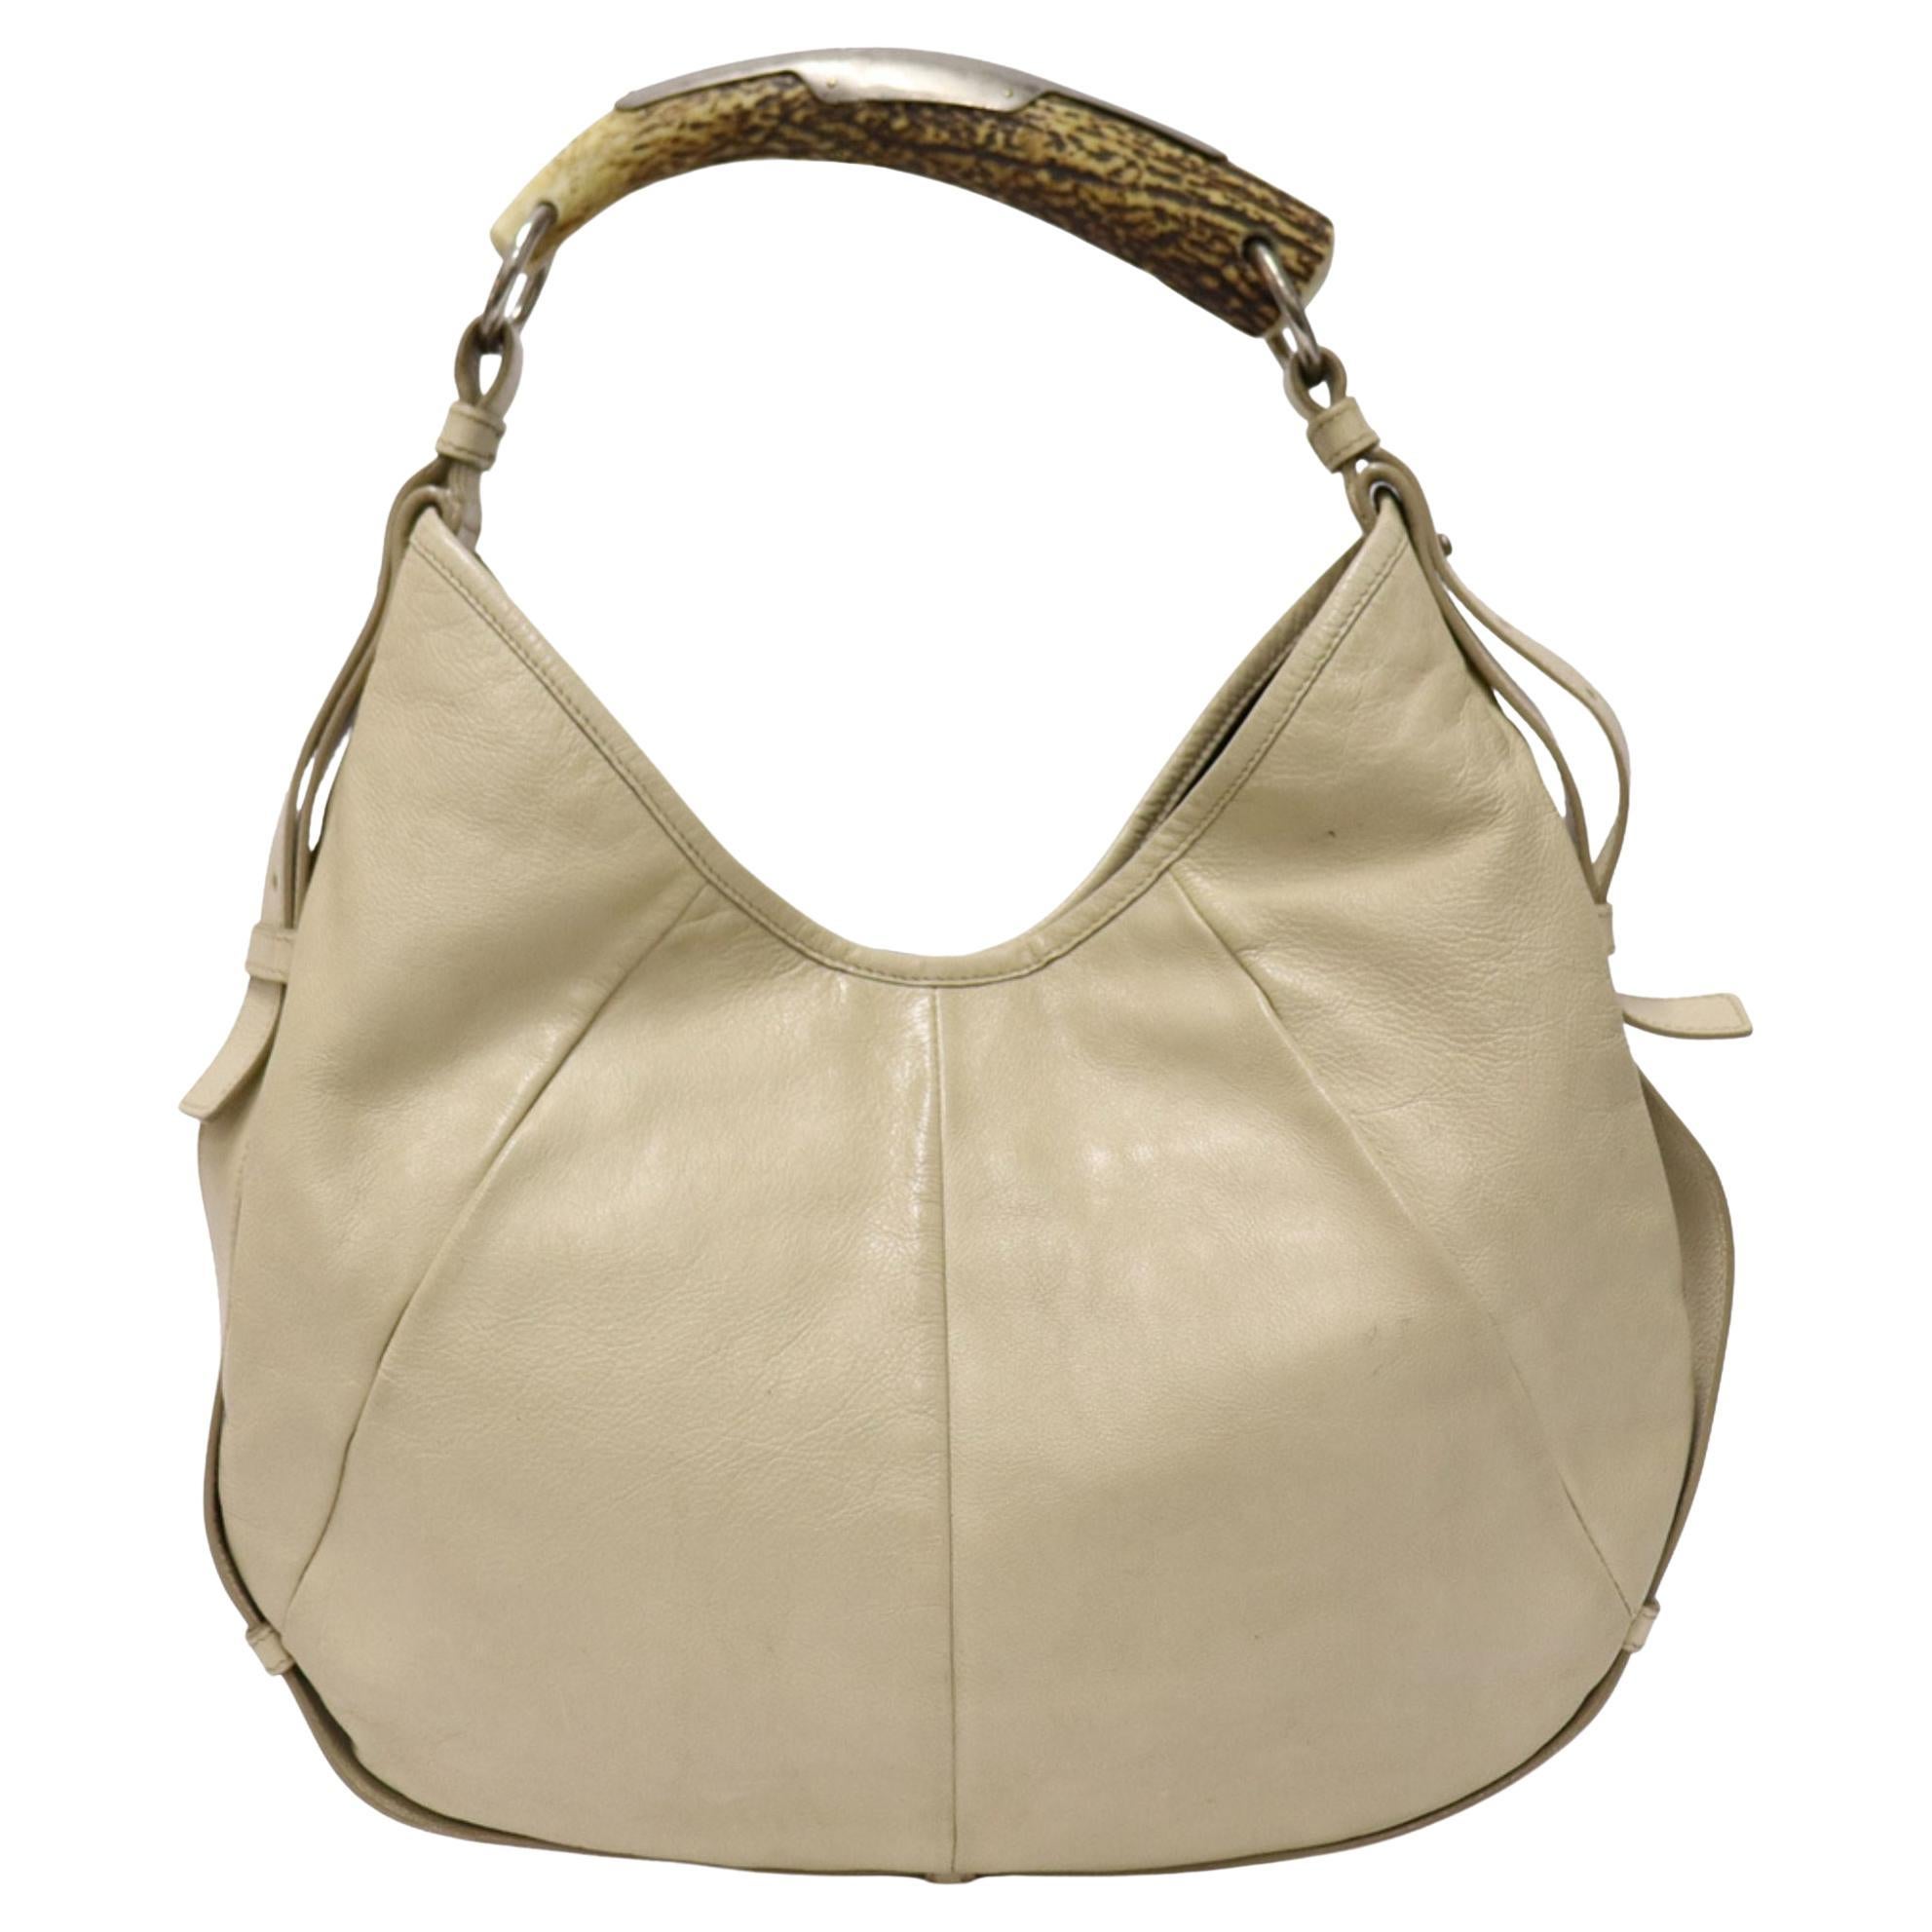 Authentic Saint Laurent YSL Bags, Shoes, and Accessories - The Purse Ladies